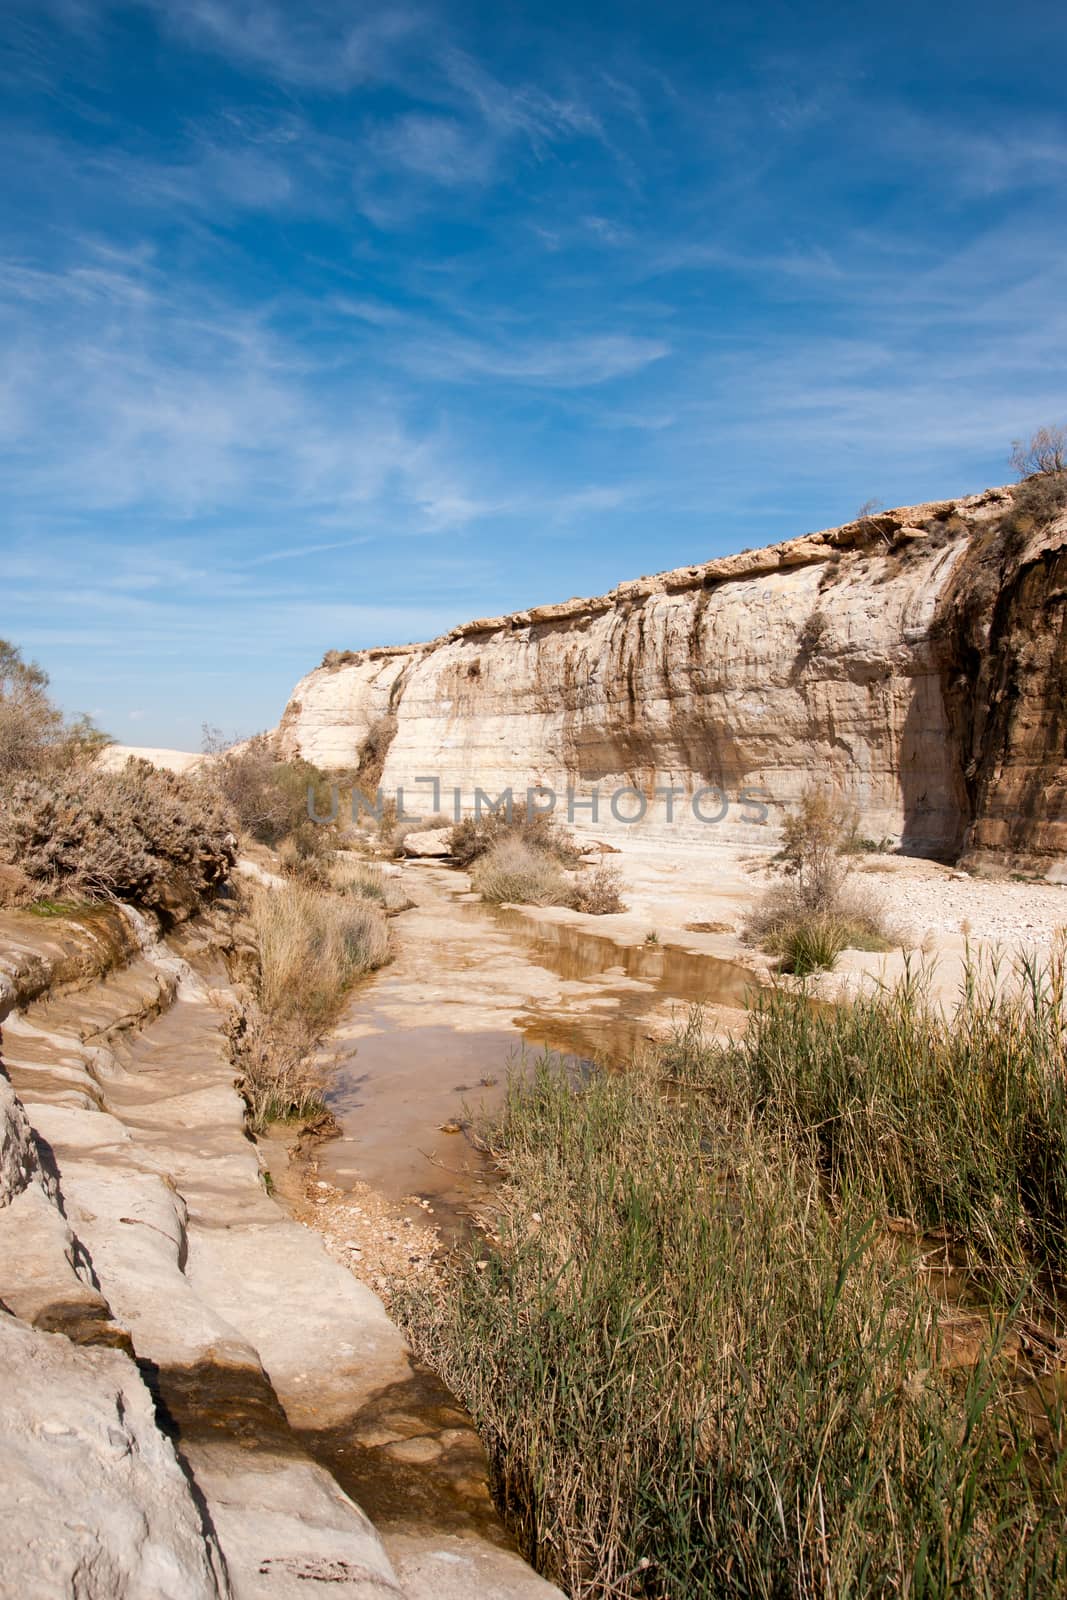 Oazis with water in the negev desert of israel